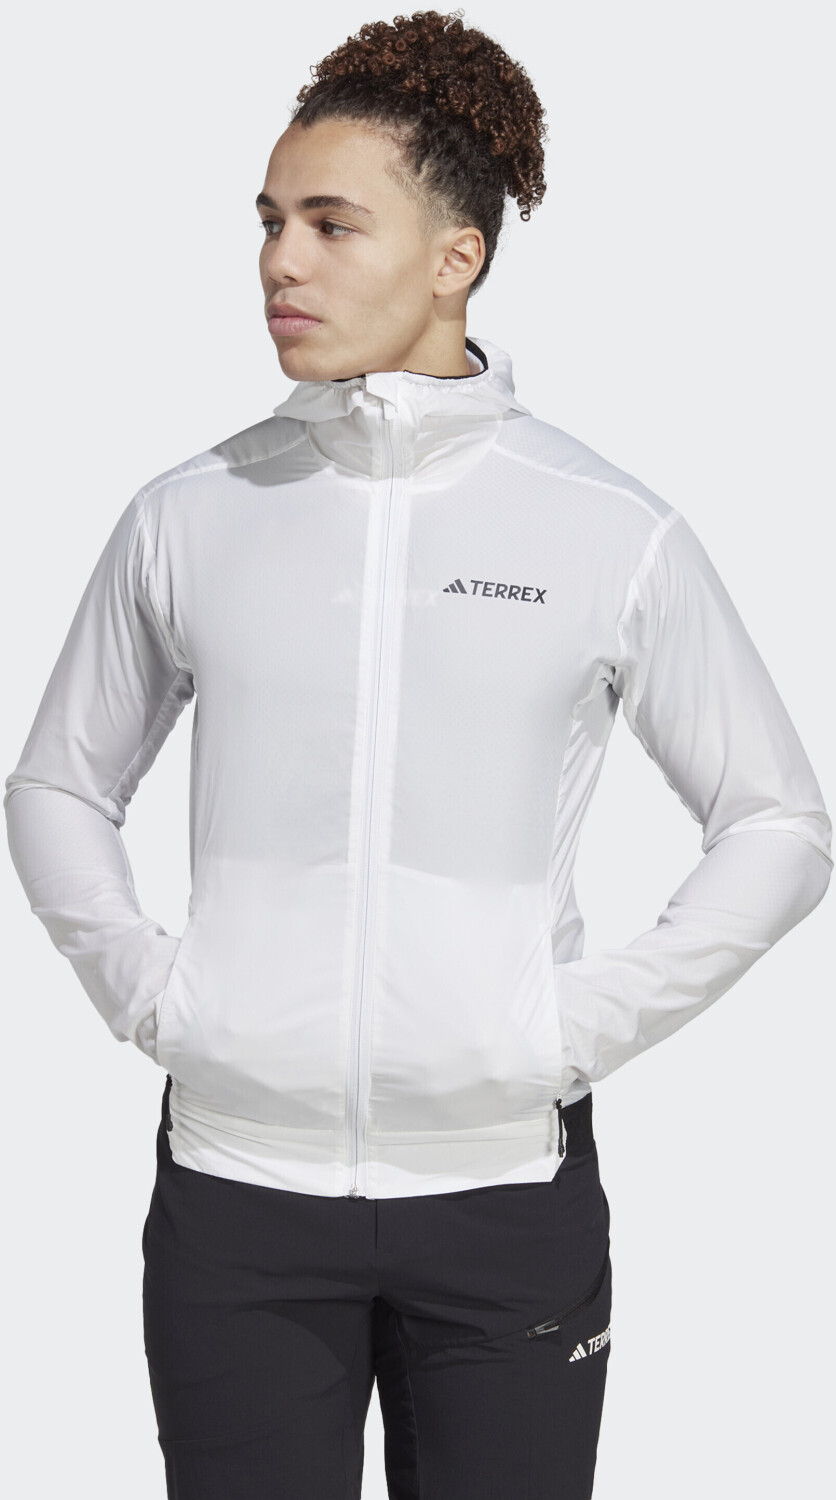 Buy Adidas Man TERREX Xperior Jacket £42.50 from Wind – Windweave Deals Best (Today) on